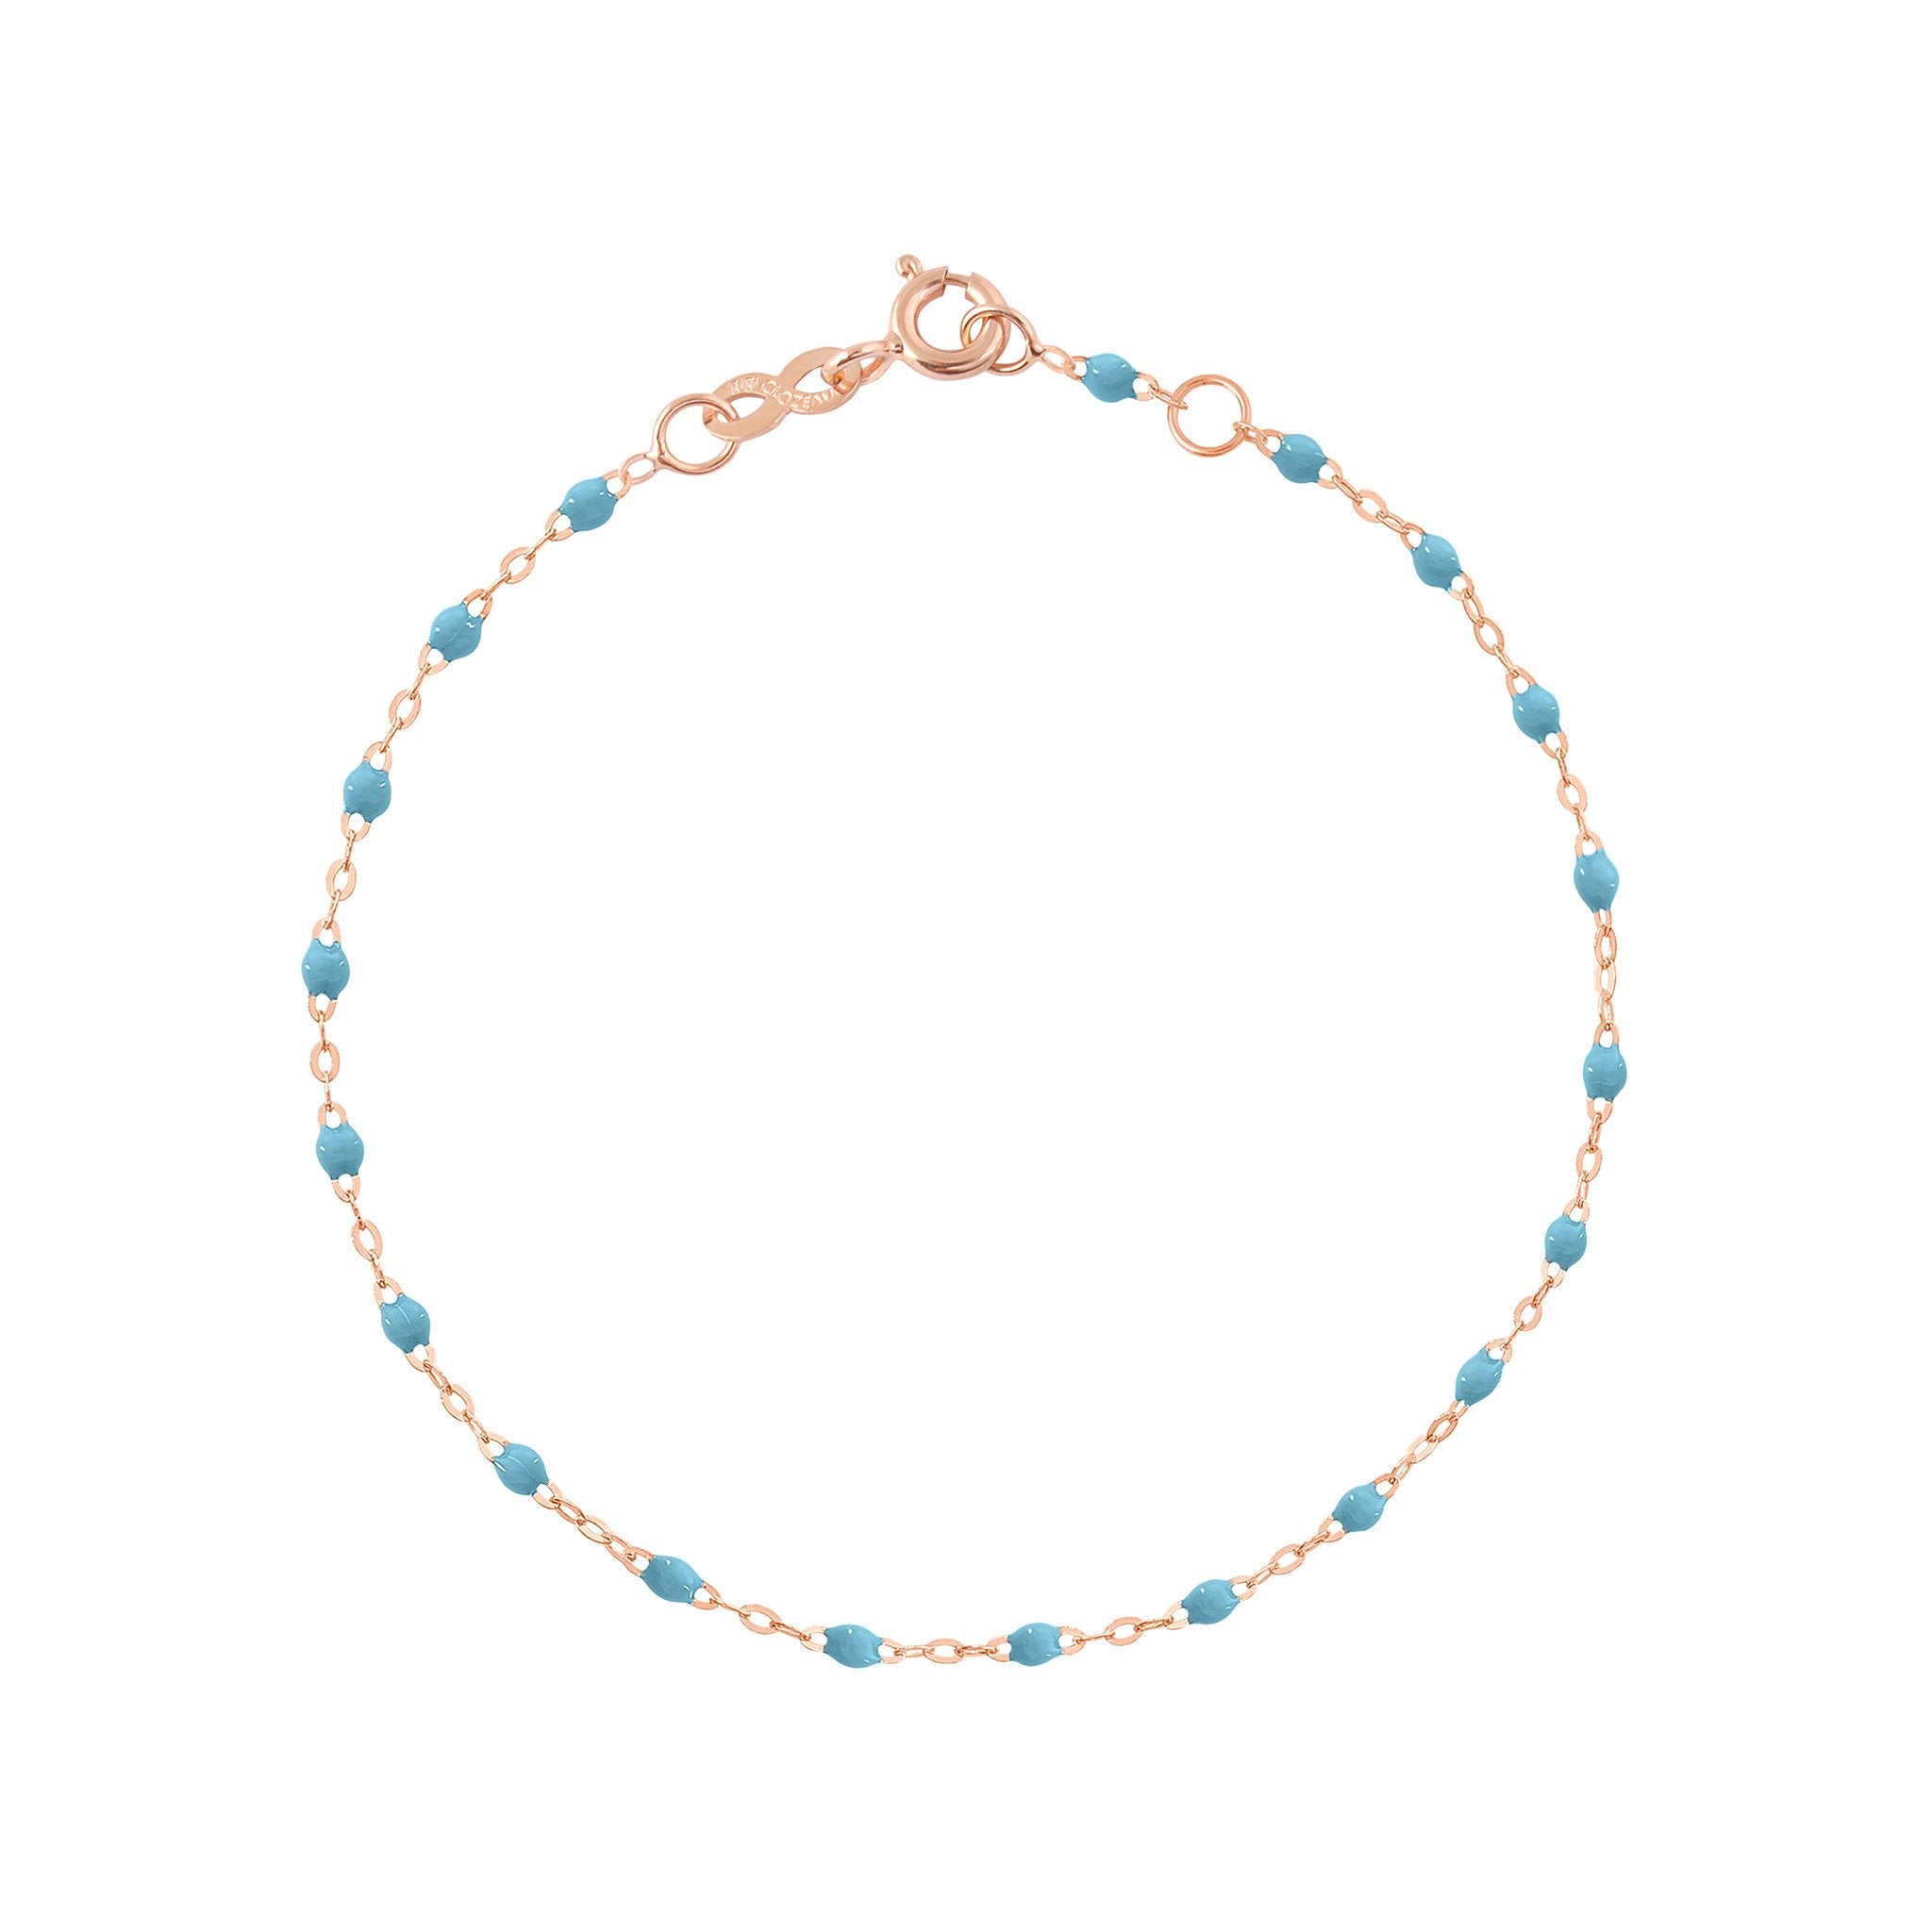 Bracelet turquoise Classique Gigi, or rose, 18 cm classique gigi Référence :  b3gi001r3418xx -1